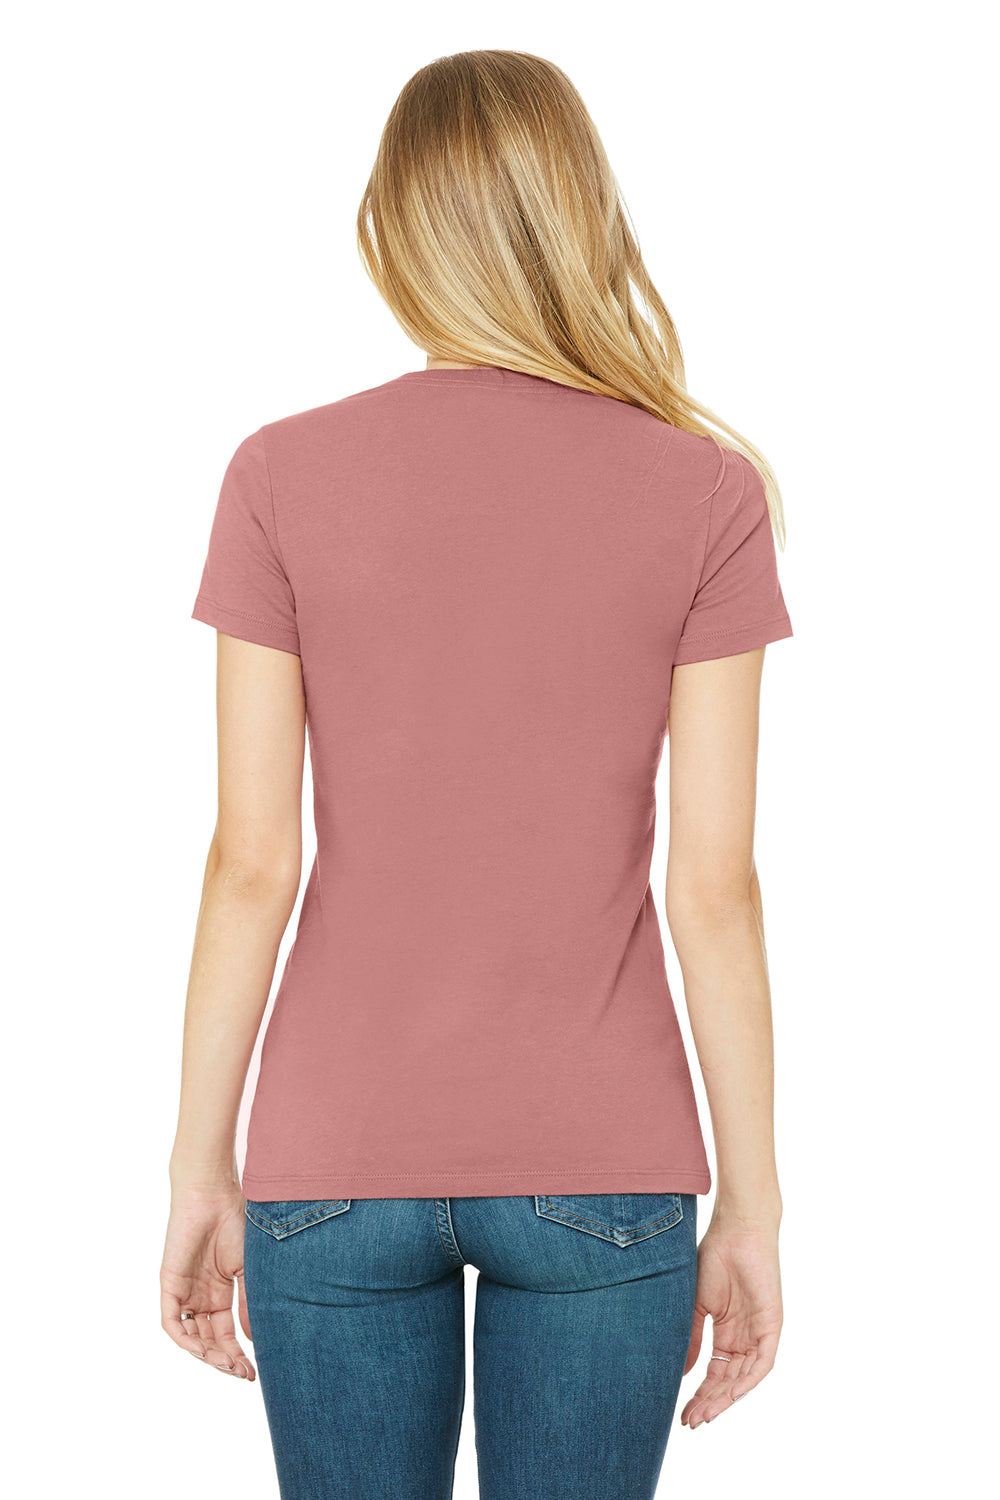 Bella + Canvas BC6004/6004 Womens The Favorite Short Sleeve Crewneck T-Shirt Mauve Model Back